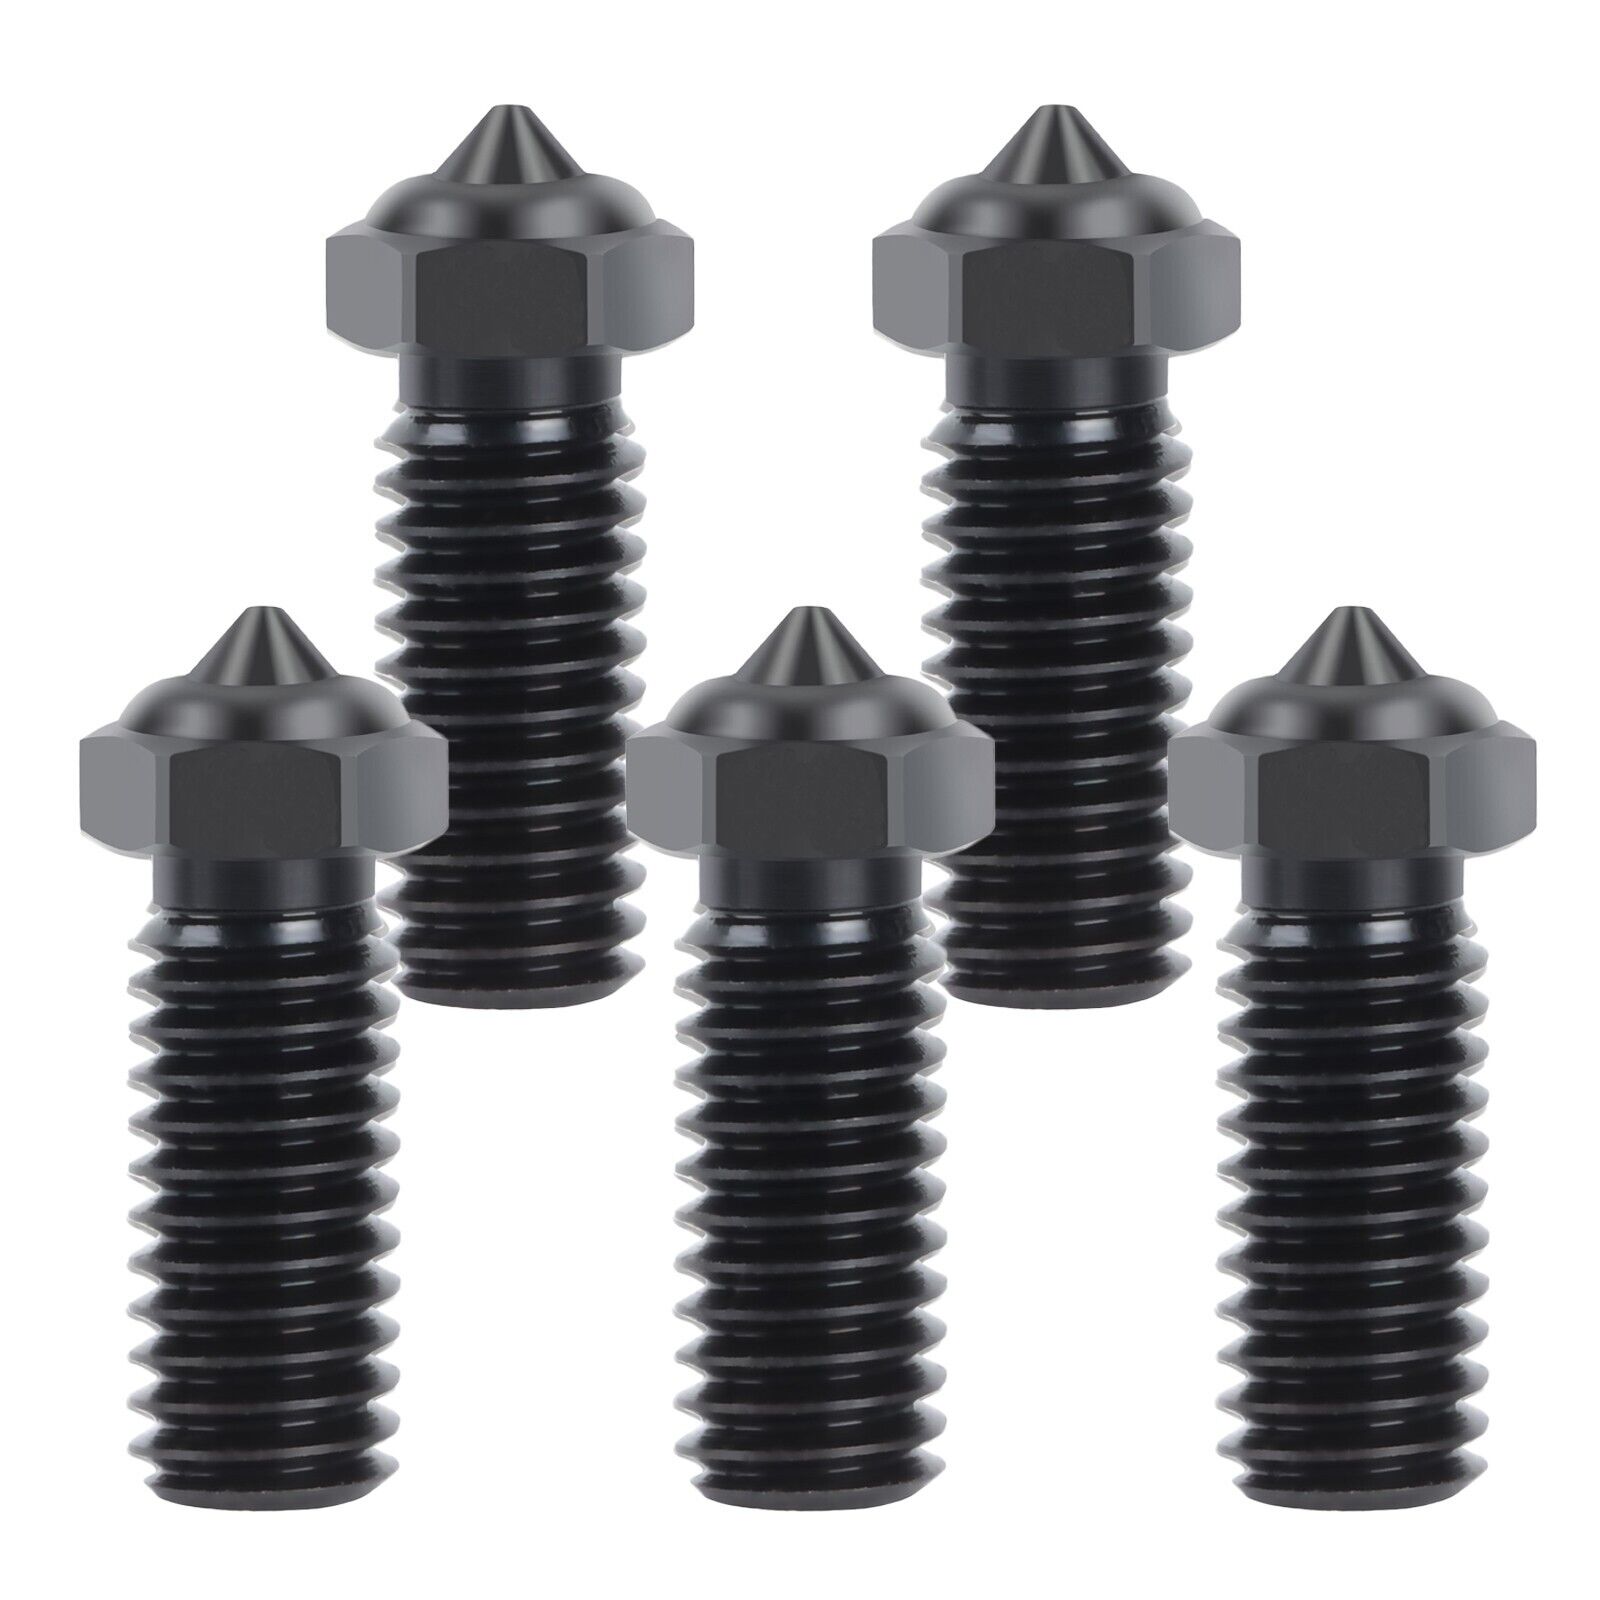 5Pcs Hardened Steel Nozzles for QIDI X-Max 3, X-Plus 3, X-smart 3, Q1 Pro